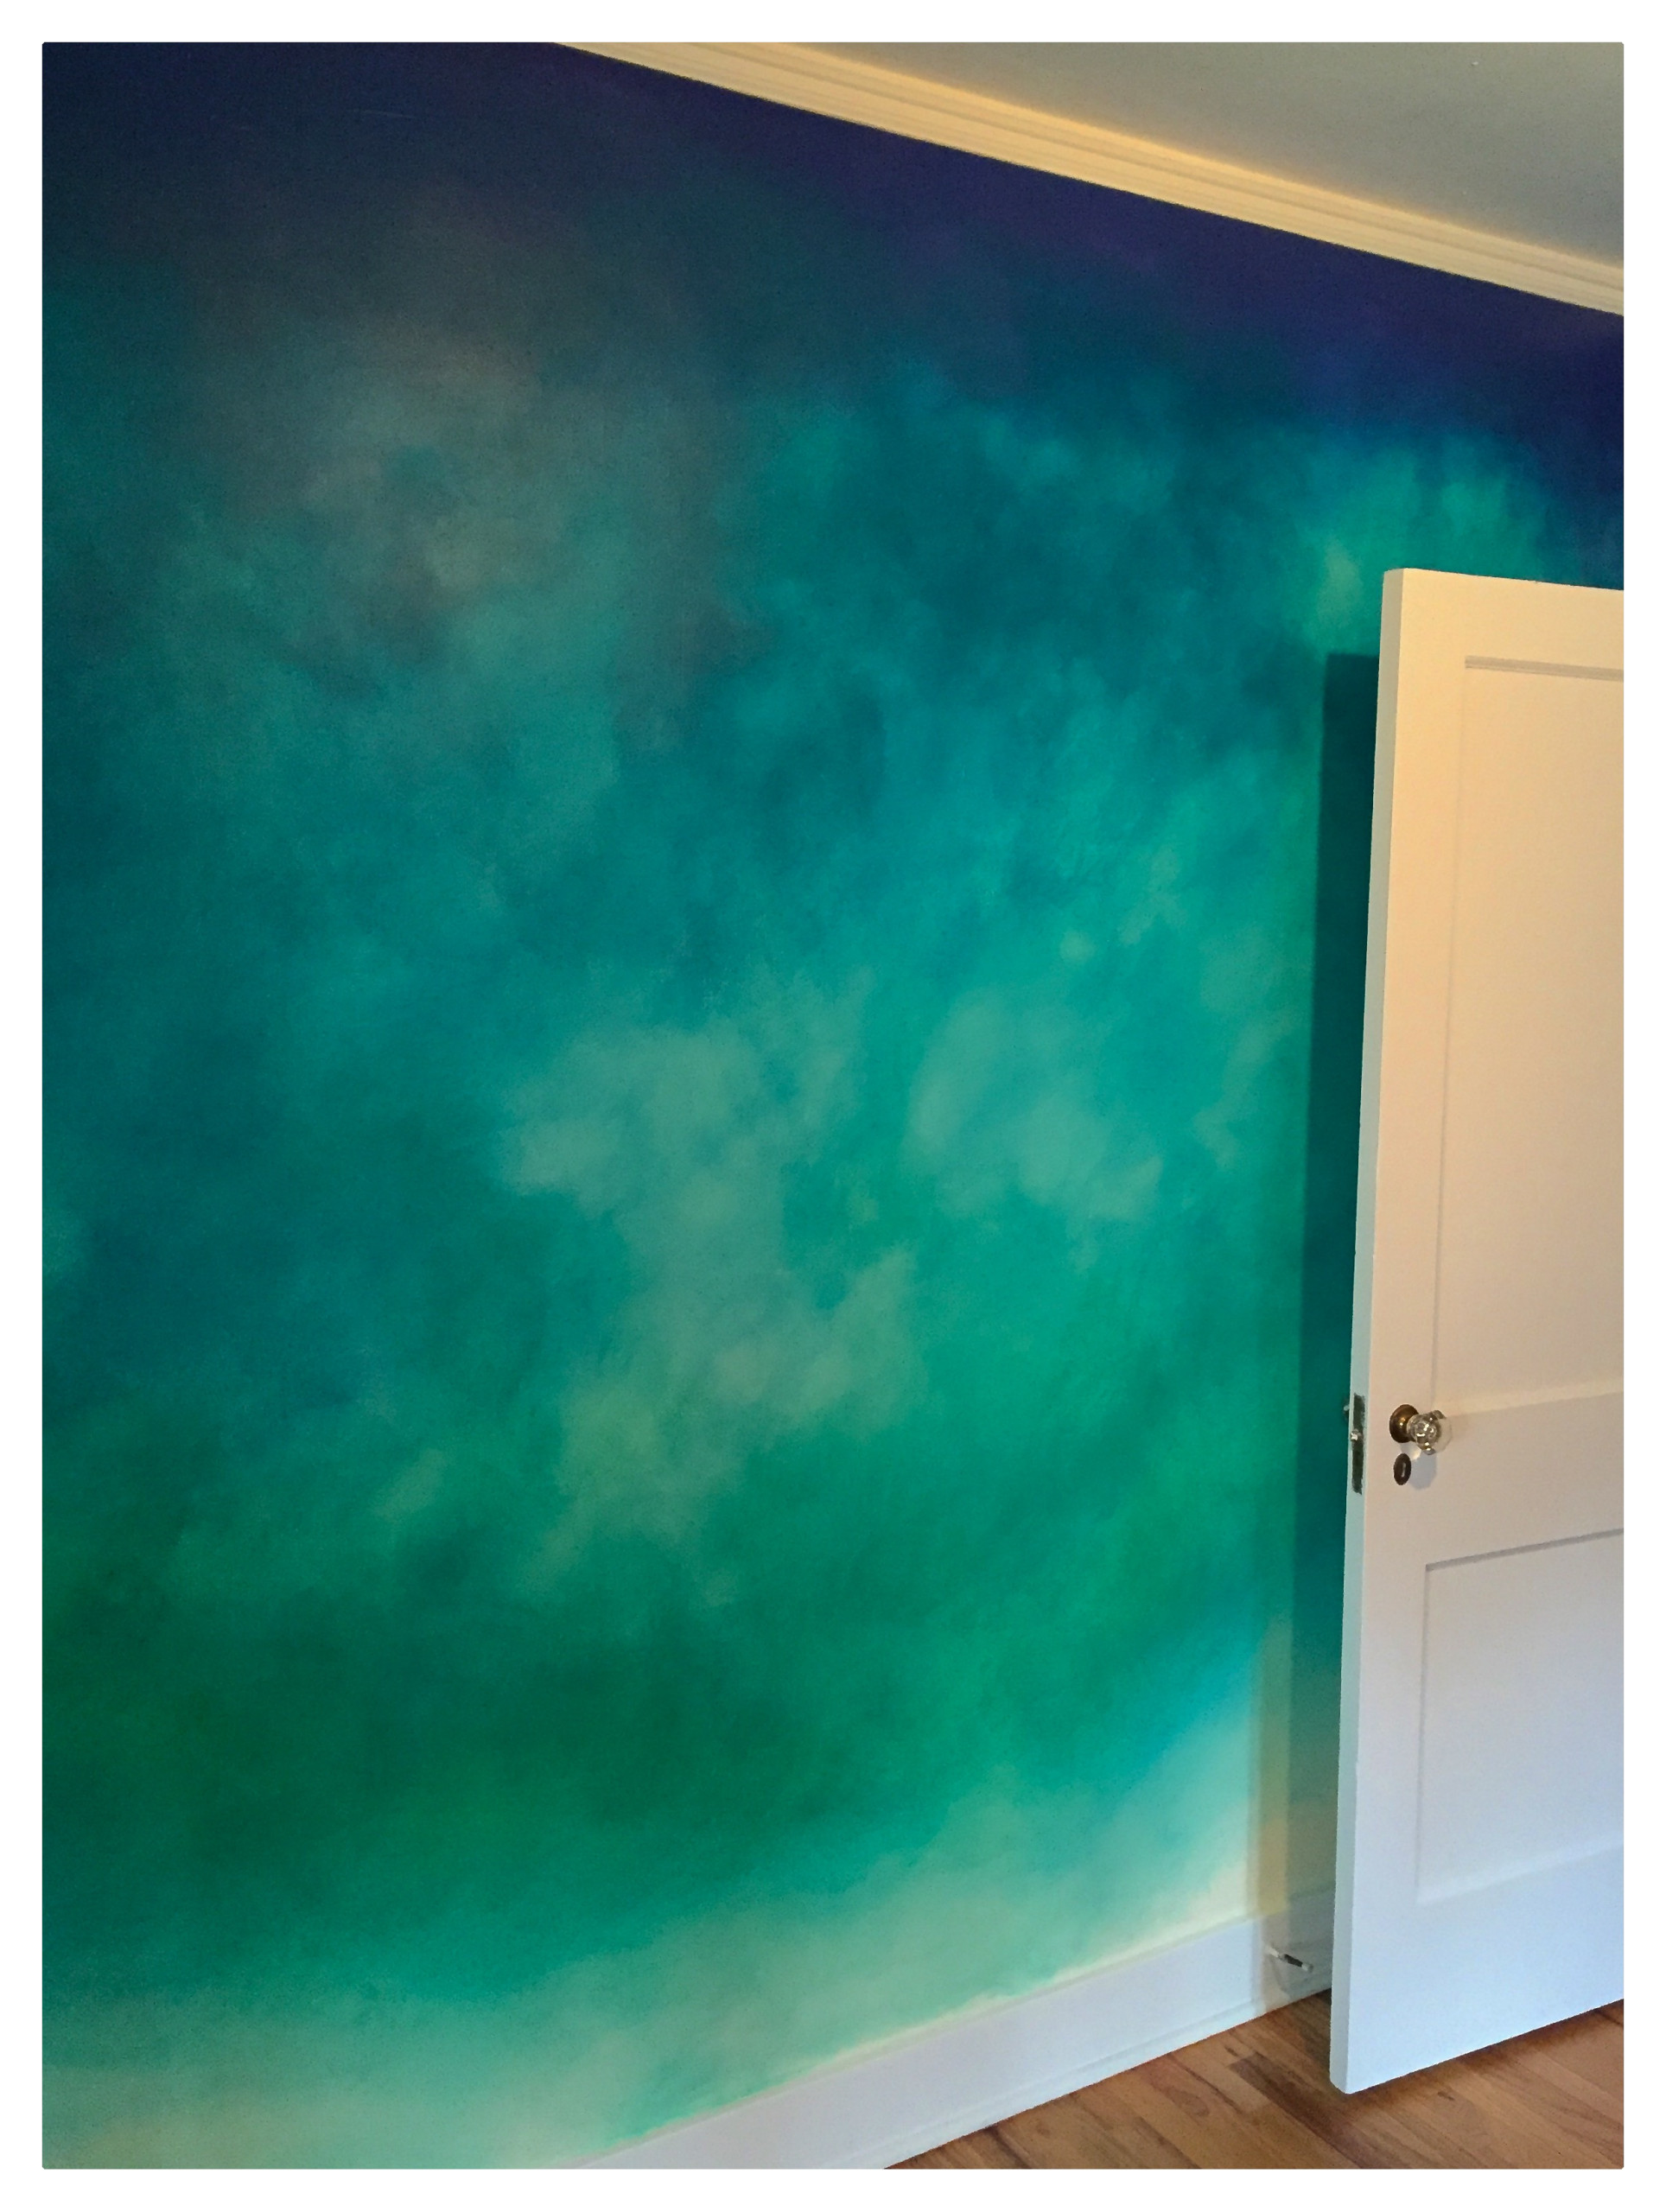 Ombre Wall Paint - Photos & Ideas | Houzz